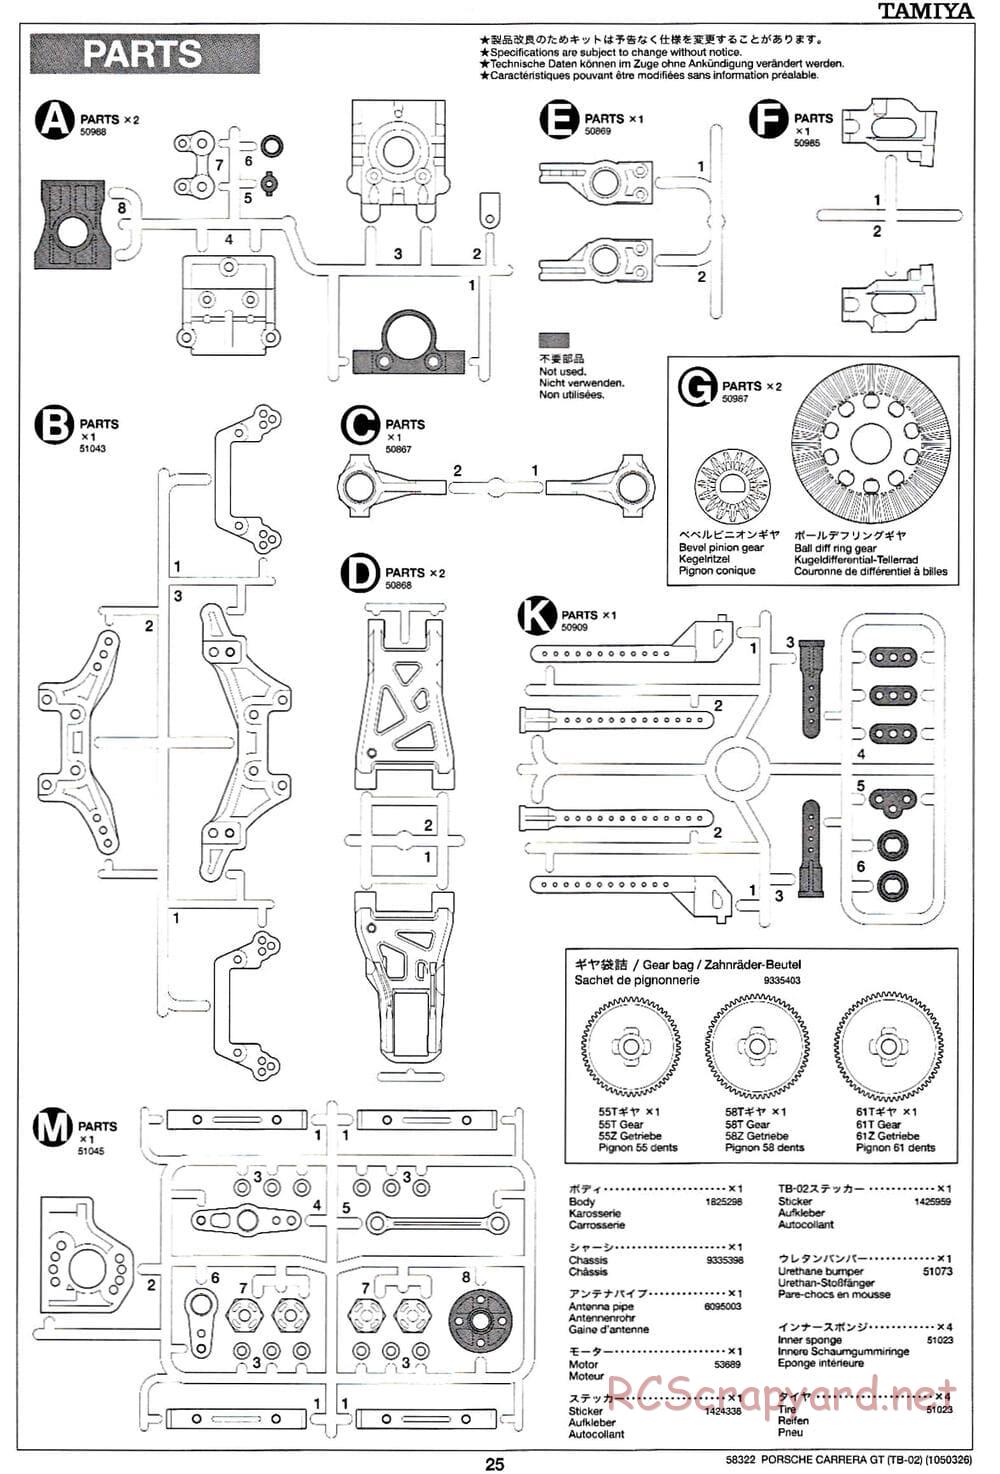 Tamiya - Porsche Carrera GT - TB-02 Chassis - Manual - Page 25